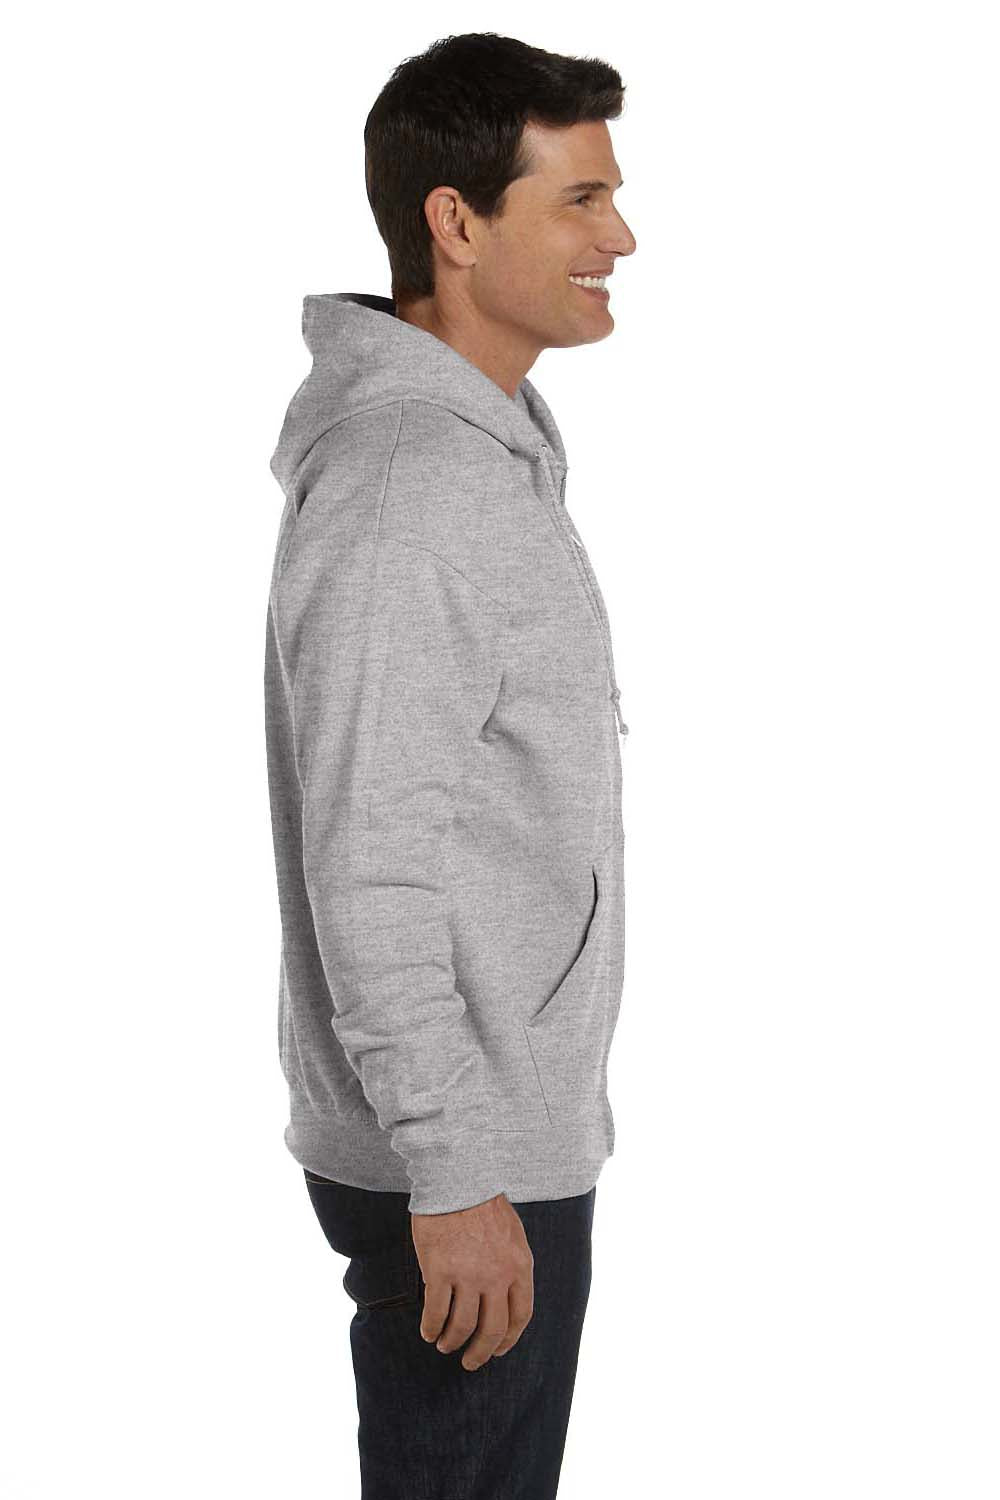 Hanes P180 Mens EcoSmart Print Pro XP Full Zip Hooded Sweatshirt Hoodie Light Steel Grey Side